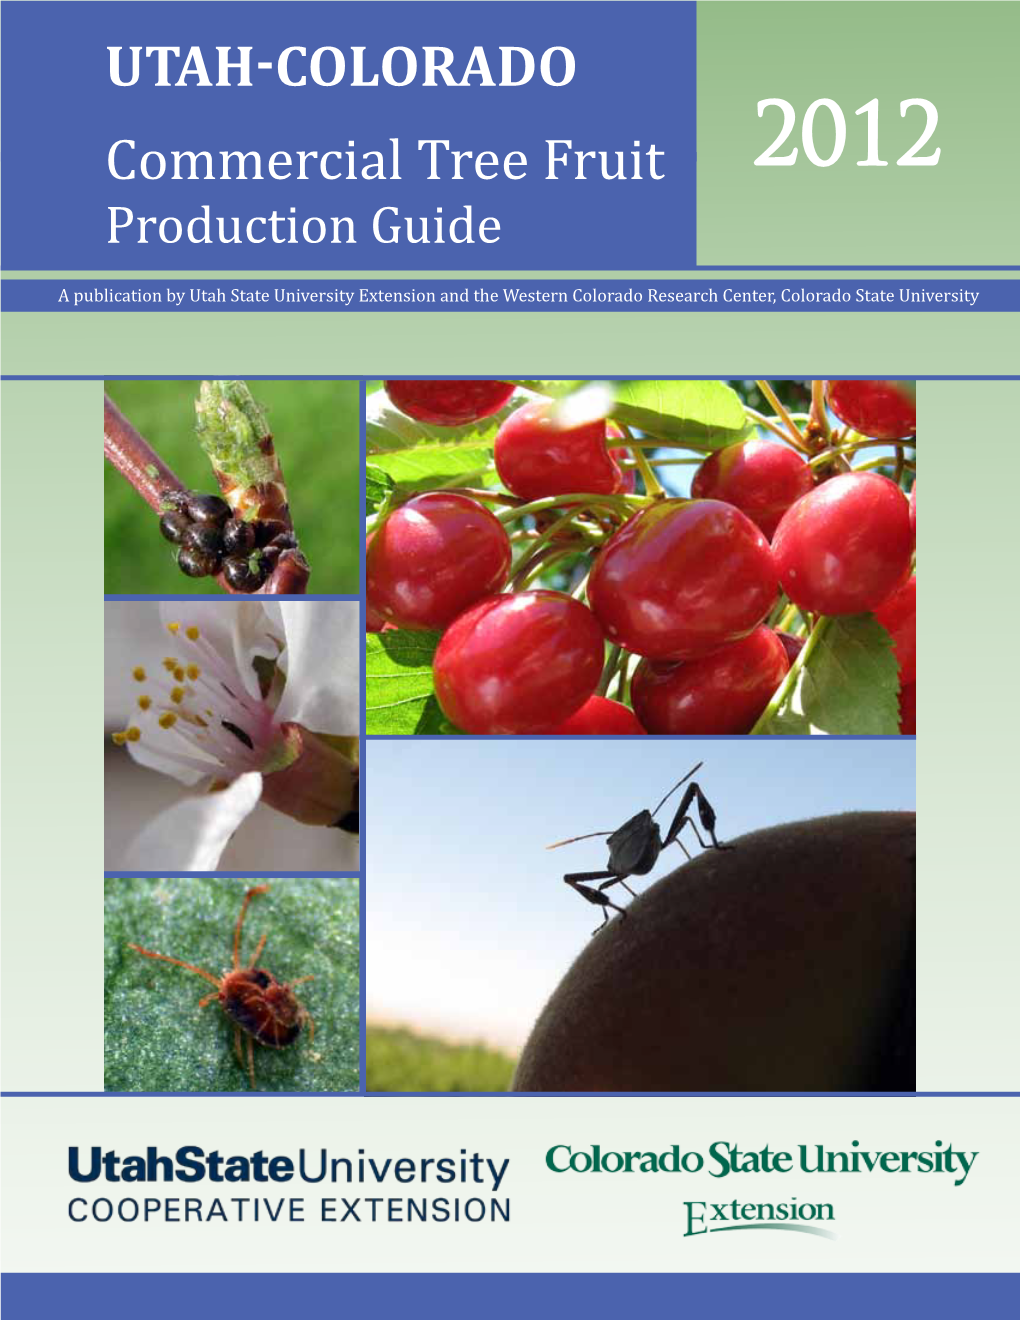 Utah-Colorado Commercial Tree Fruit 2012 Production Guide